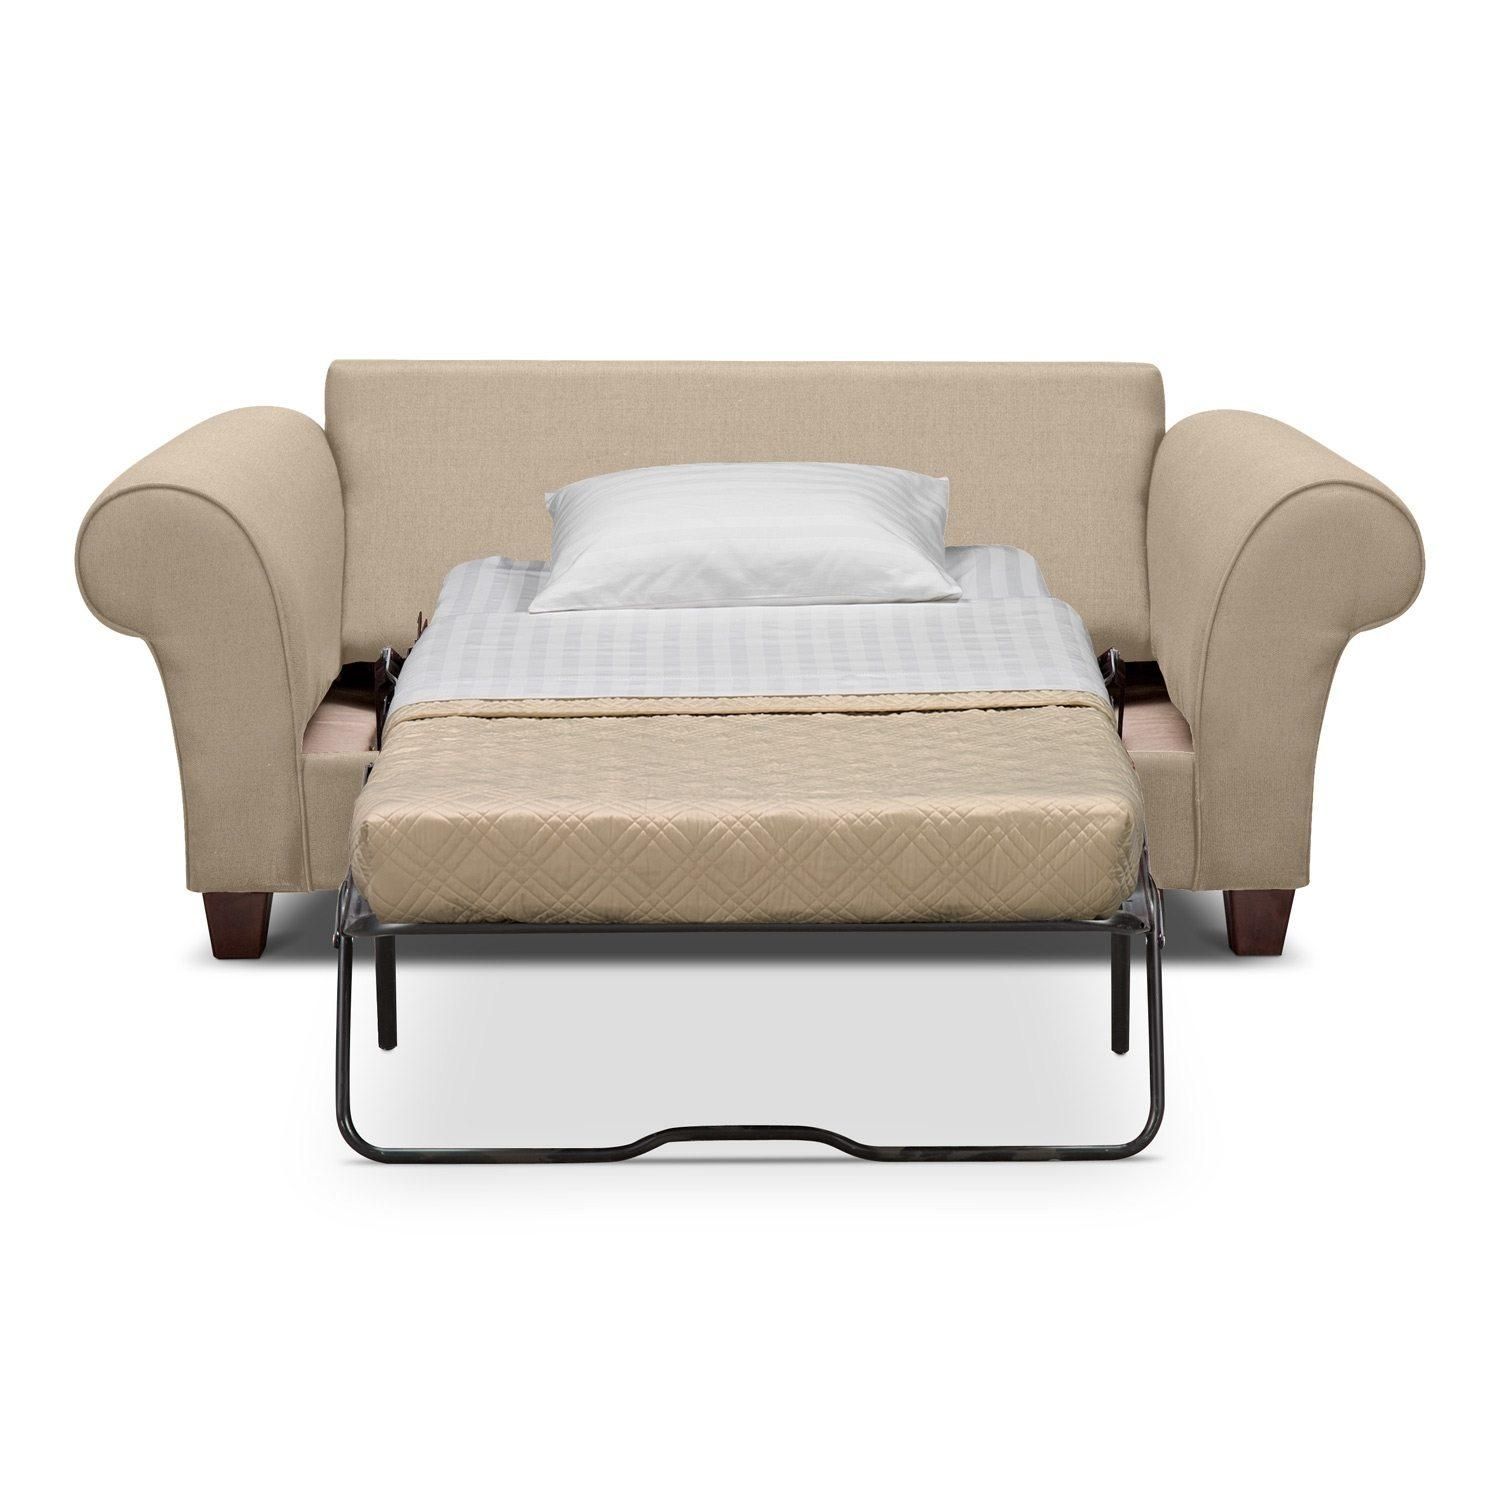 Davis Sleeper Sofa With Design Image 28312 | Kengire Inside Davis Sleeper Sofas (View 7 of 20)